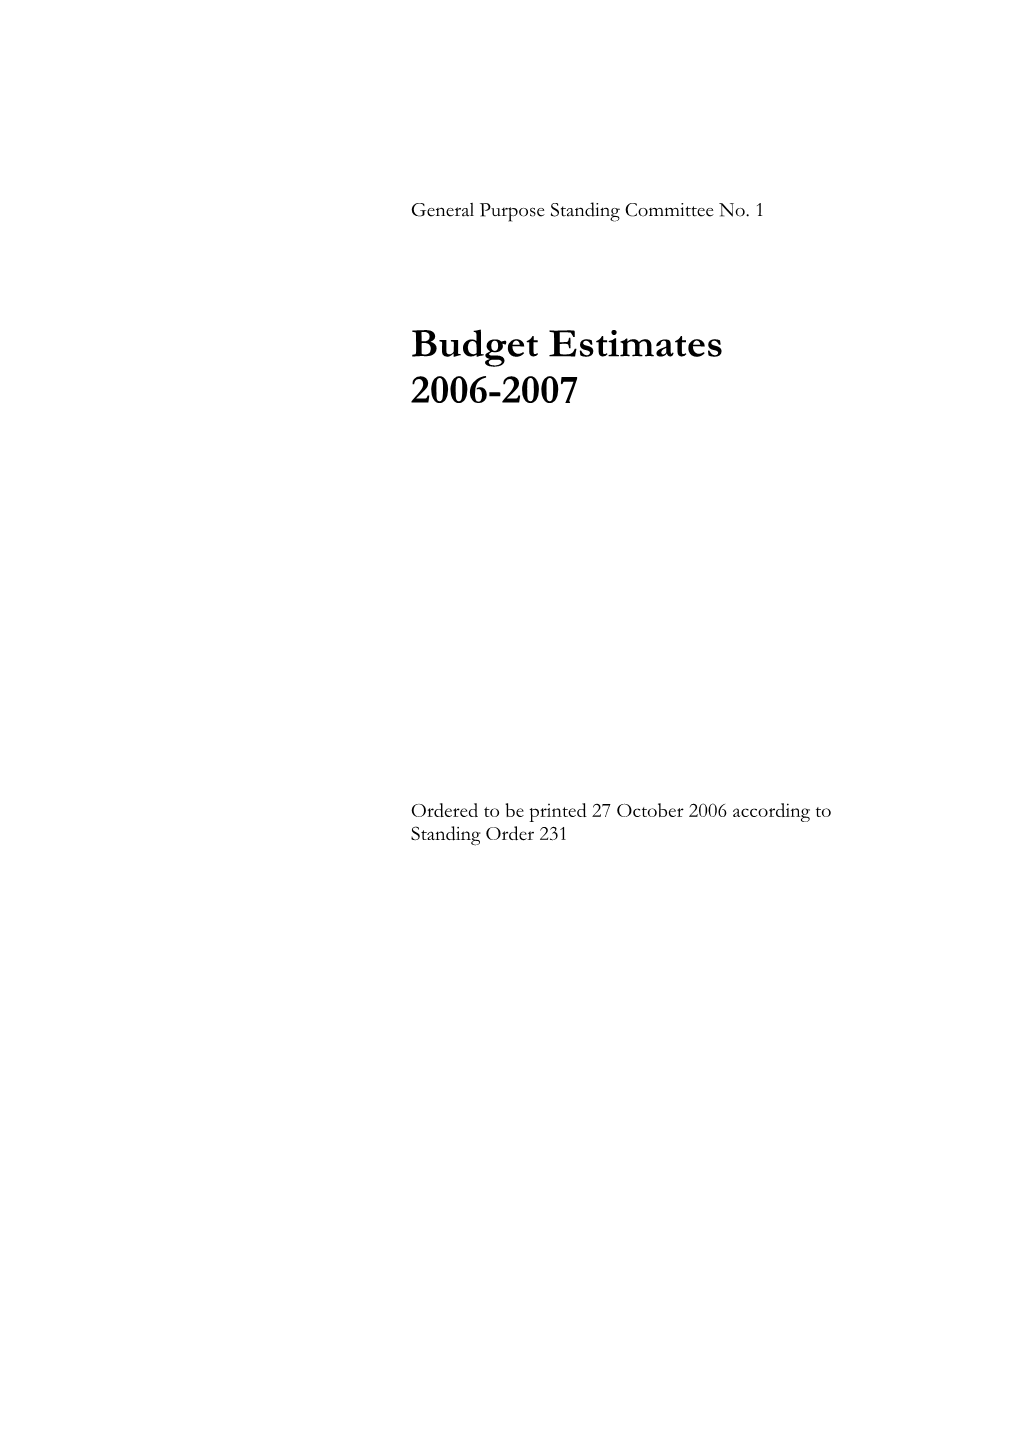 2006-07 Budget Estimates Report 30 GPSC 1